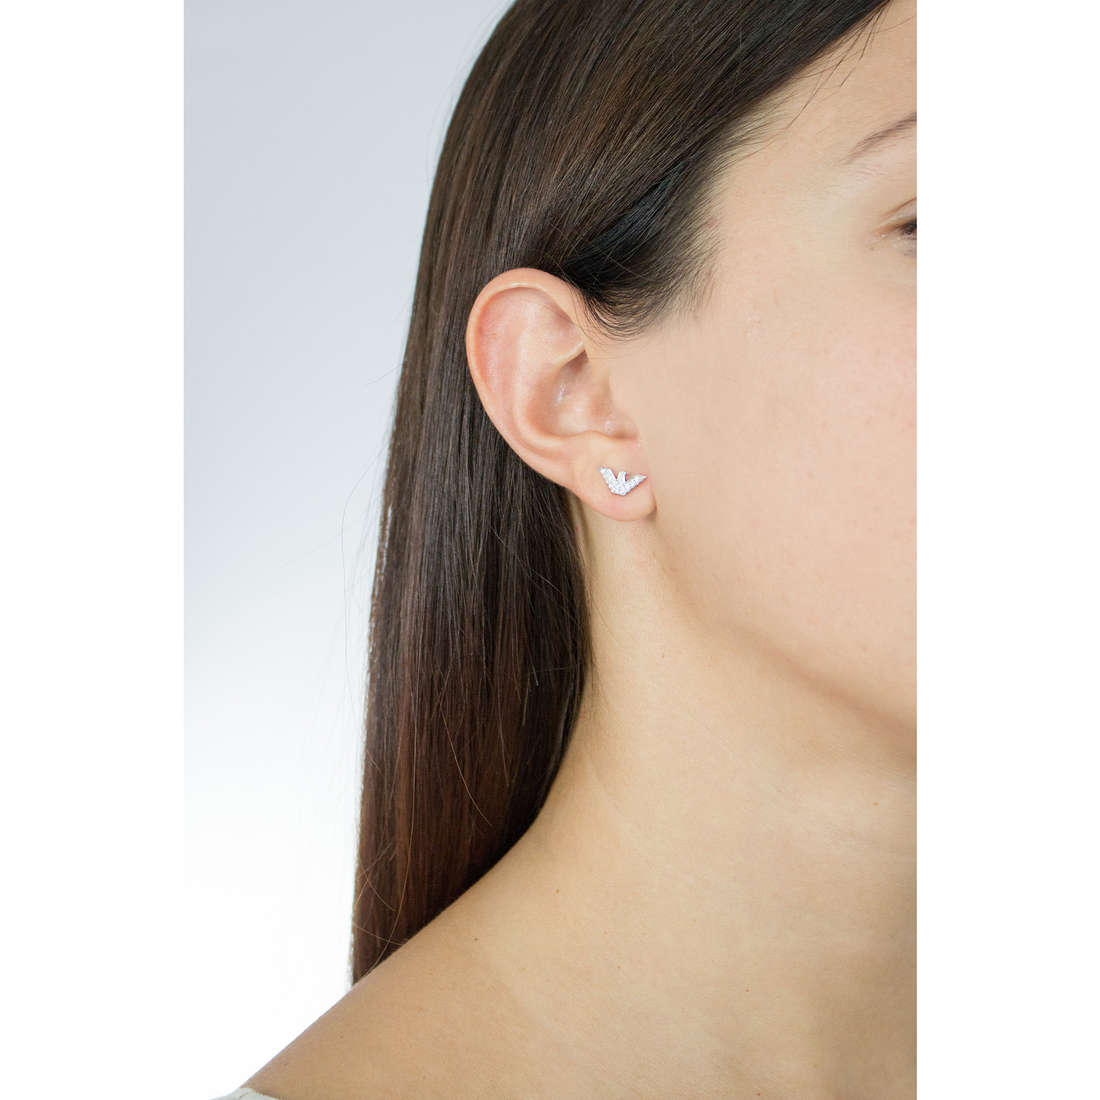 Emporio Armani earrings woman EG3027040 wearing